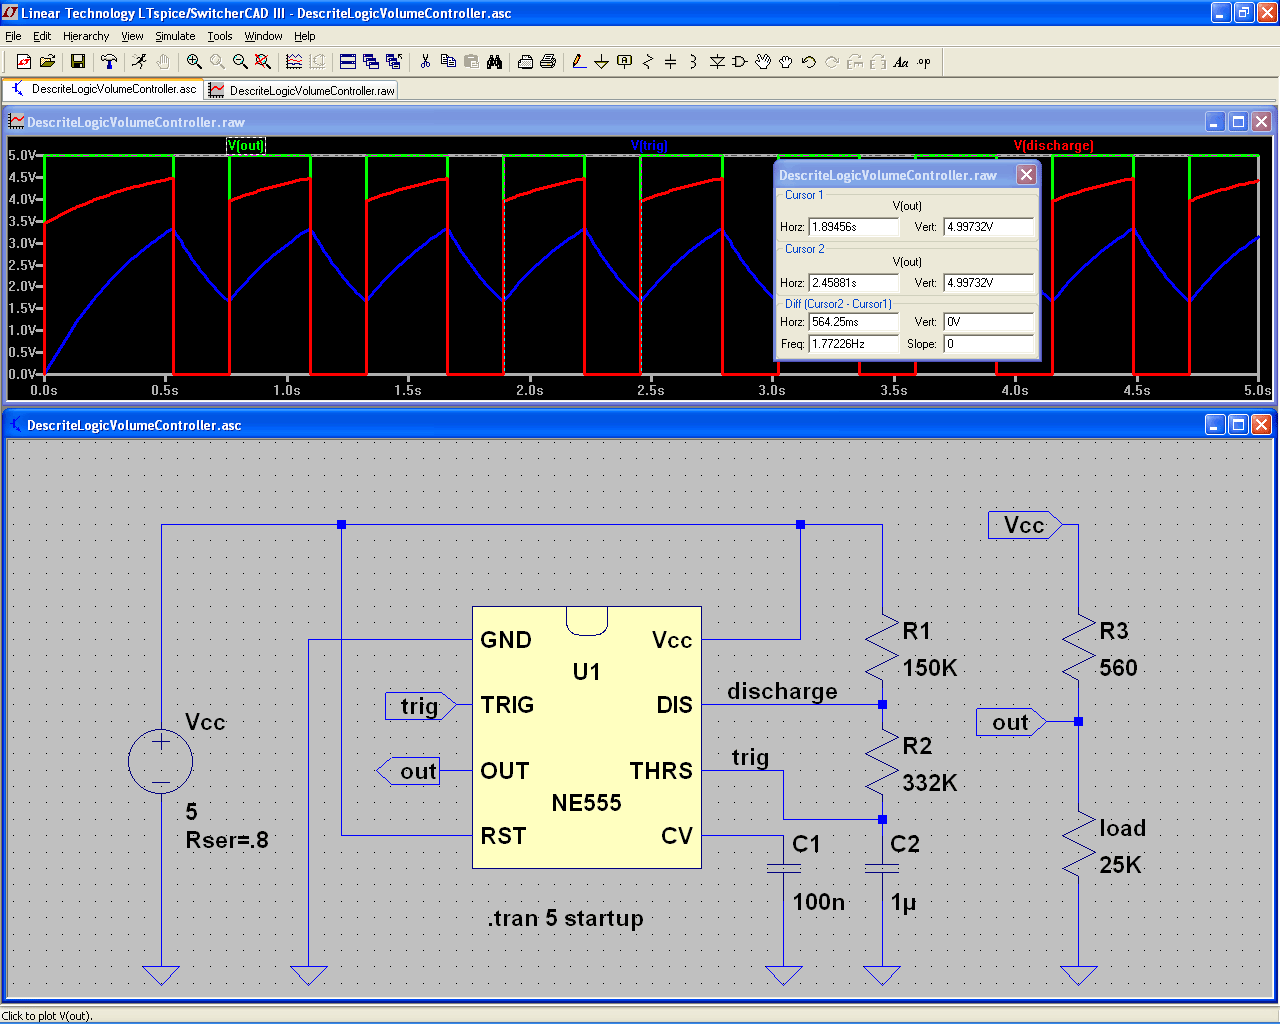 LTspice/SwitcherCAD III circuit diagram, waveforms, and cursor measurements - Large